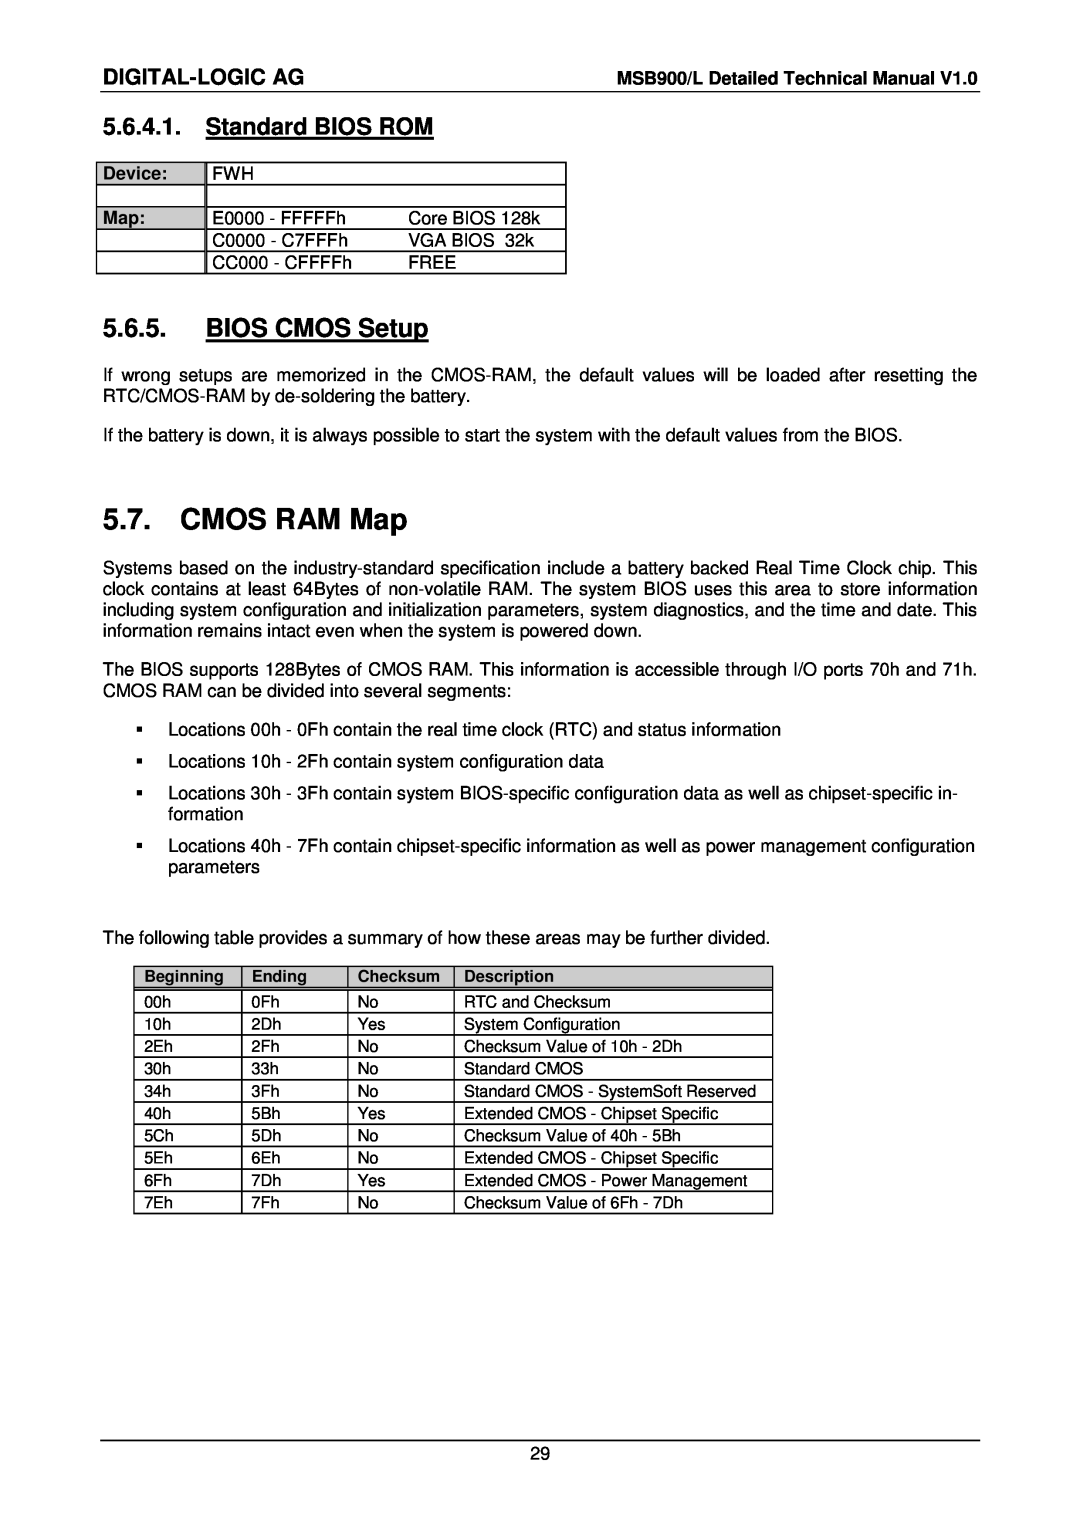 Compaq MSB900L user manual CMOS RAM Map, BIOS CMOS Setup, Standard BIOS ROM, Digital-Logic Ag 